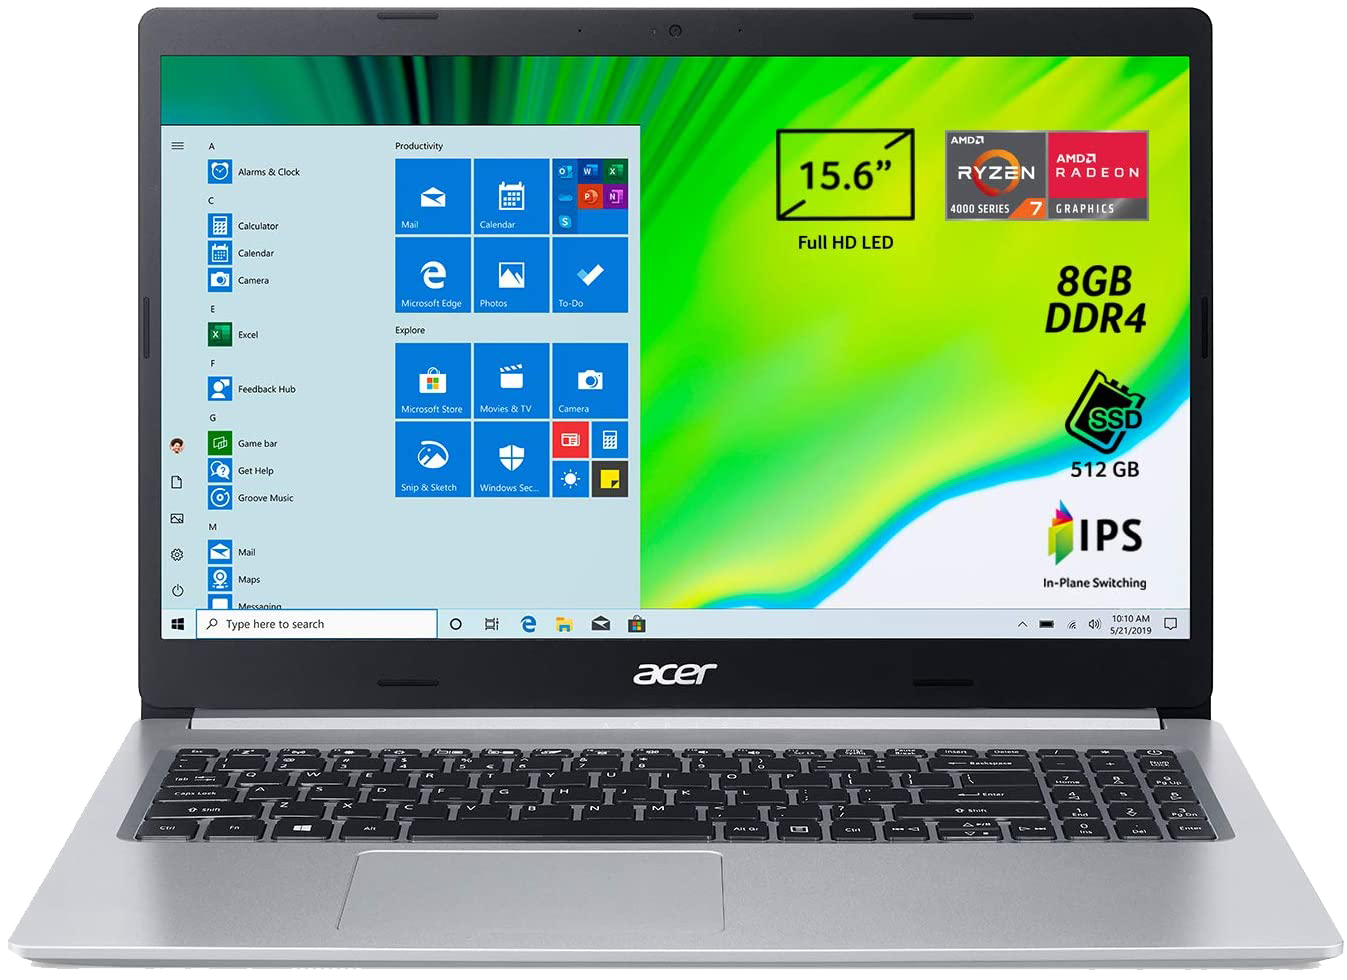 Acer Aspire 5 AMD